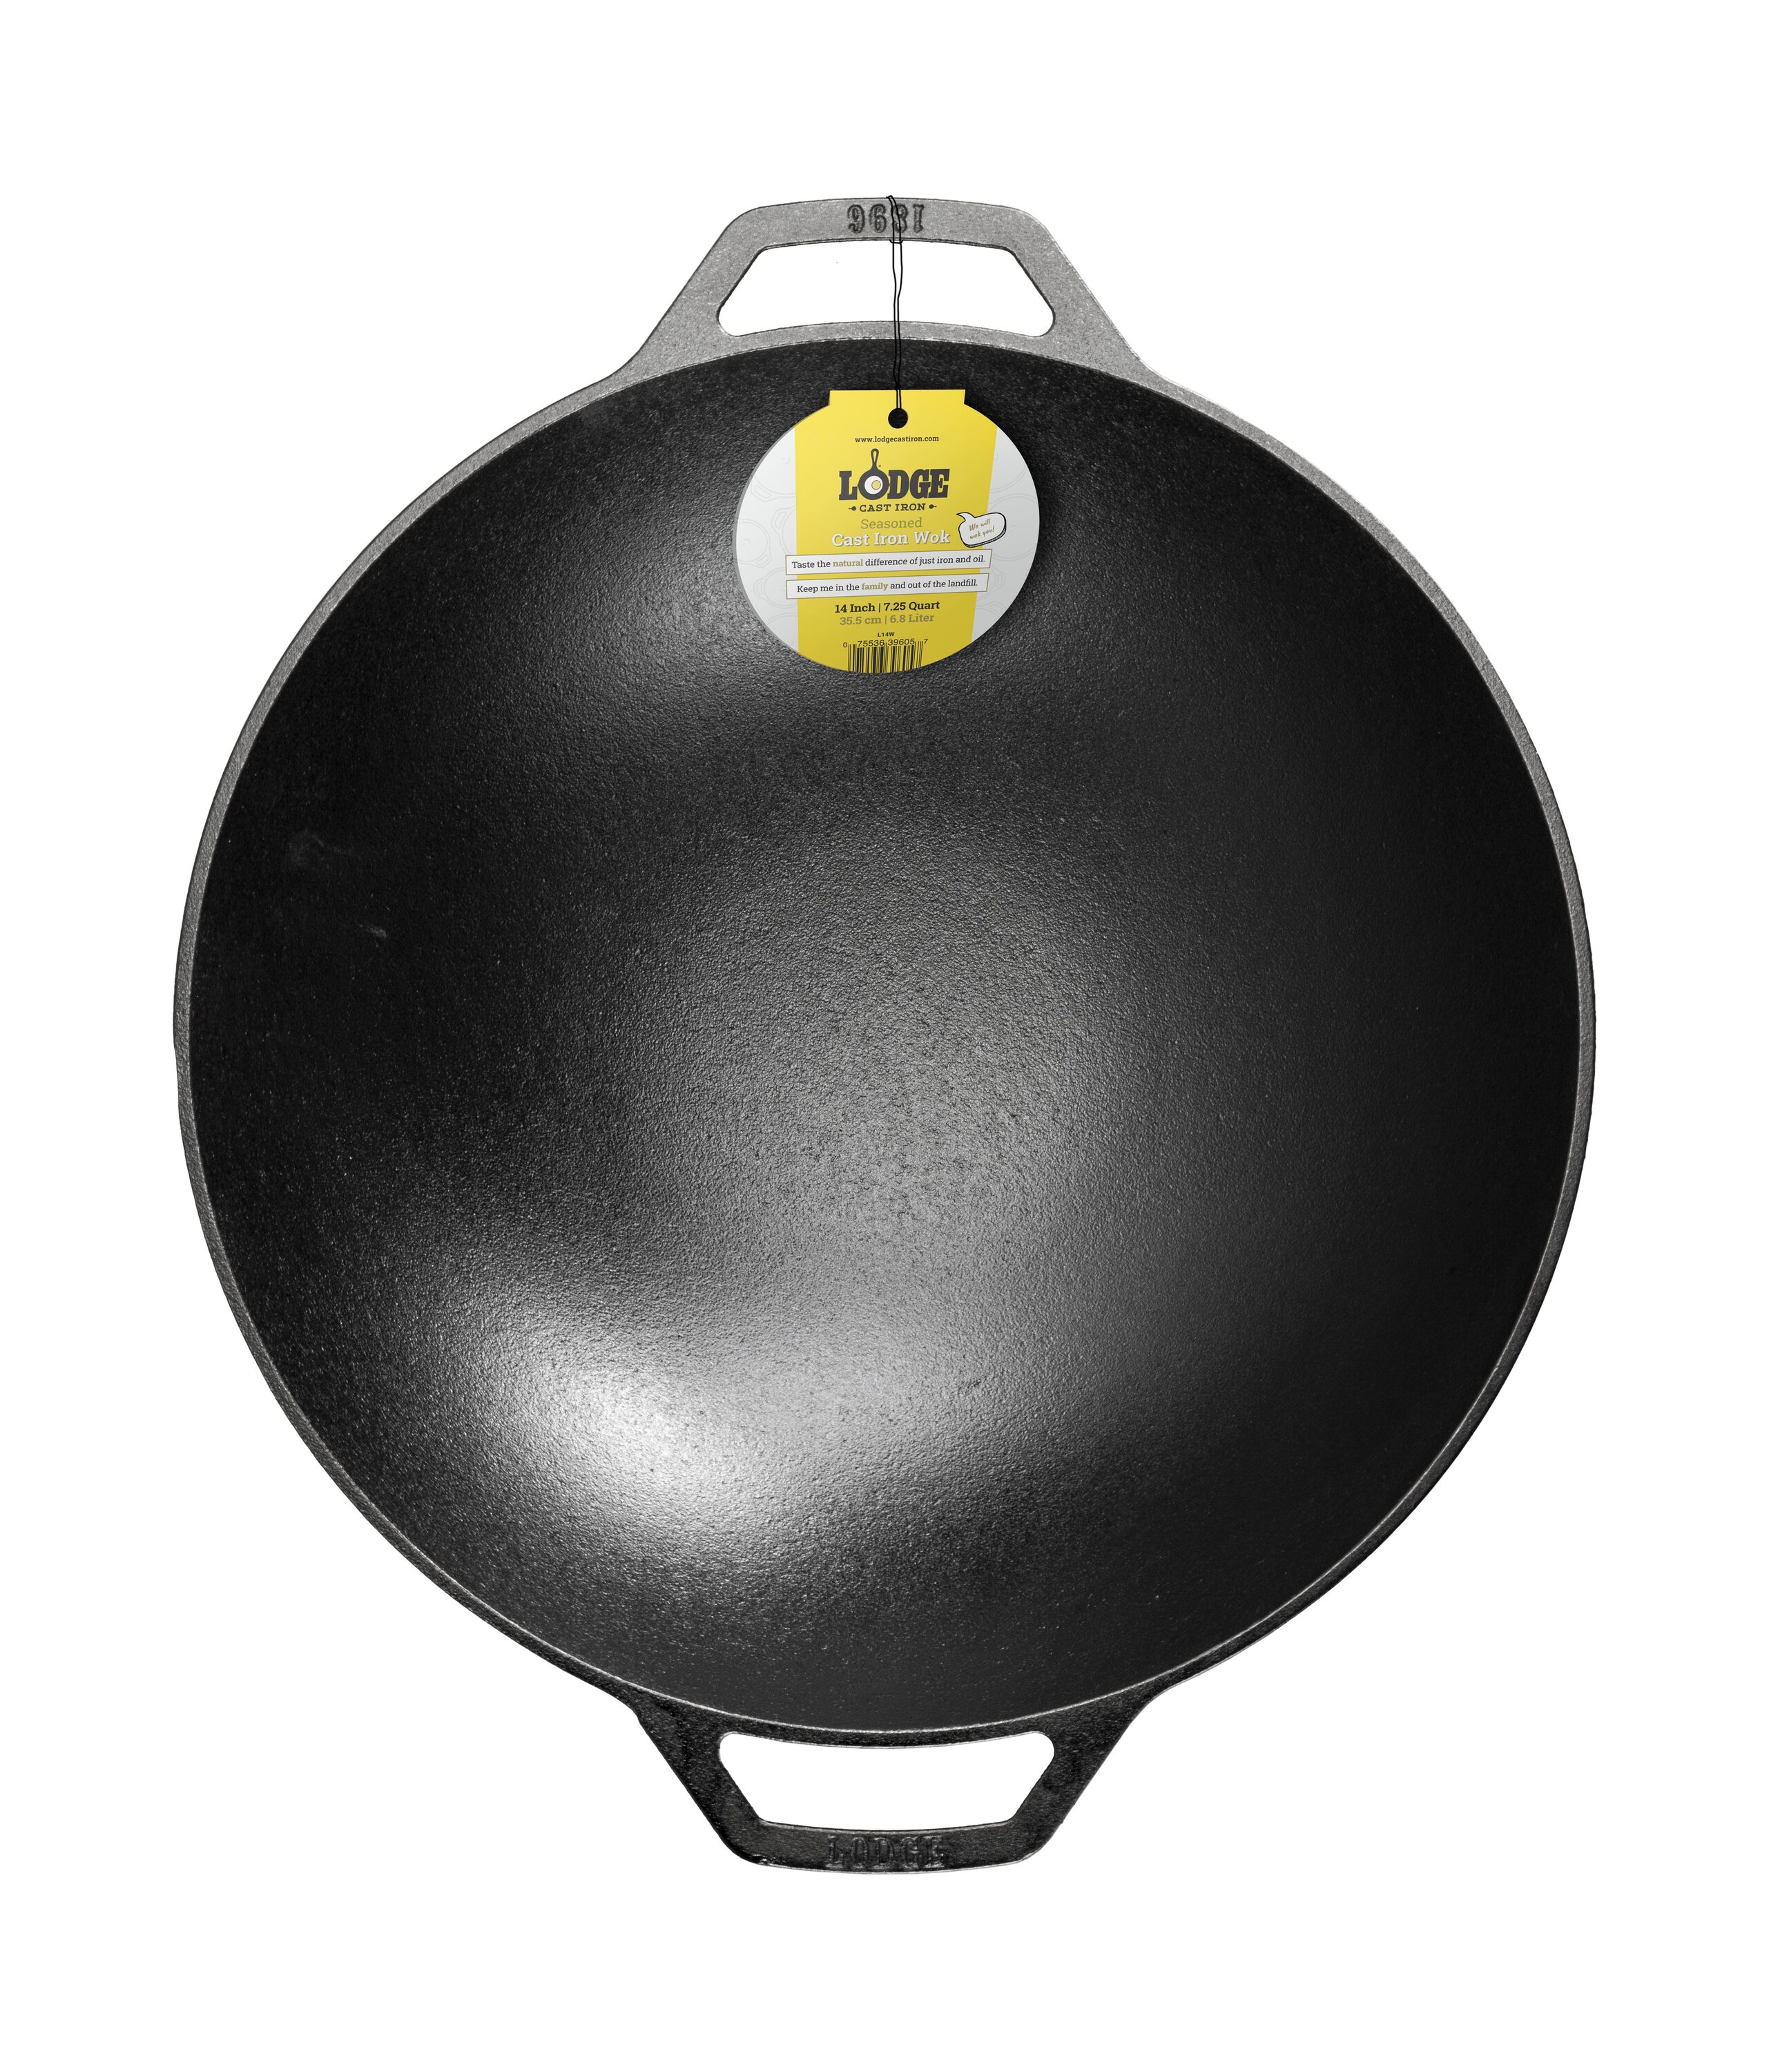 Buy Lodge L9MW Black Mini Wok Compatible with Gas Stovetop Black